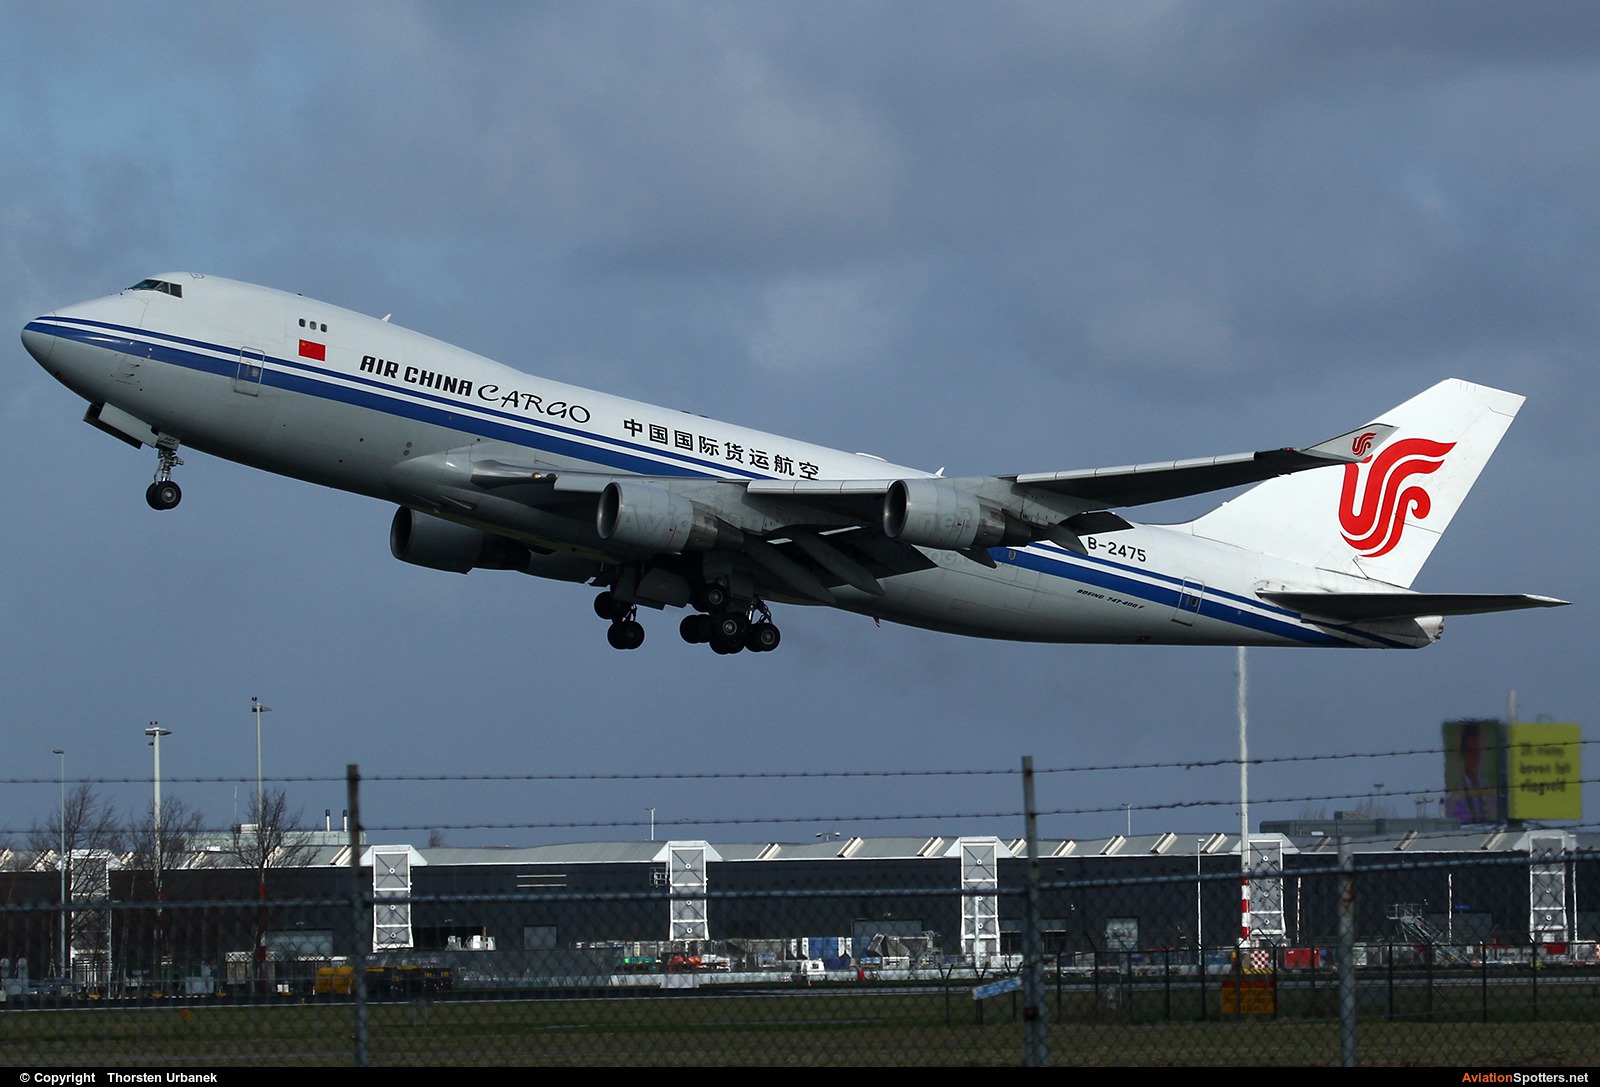 Air China Cargo  -  747-400F  (B-2475) By Thorsten Urbanek (toto1973)